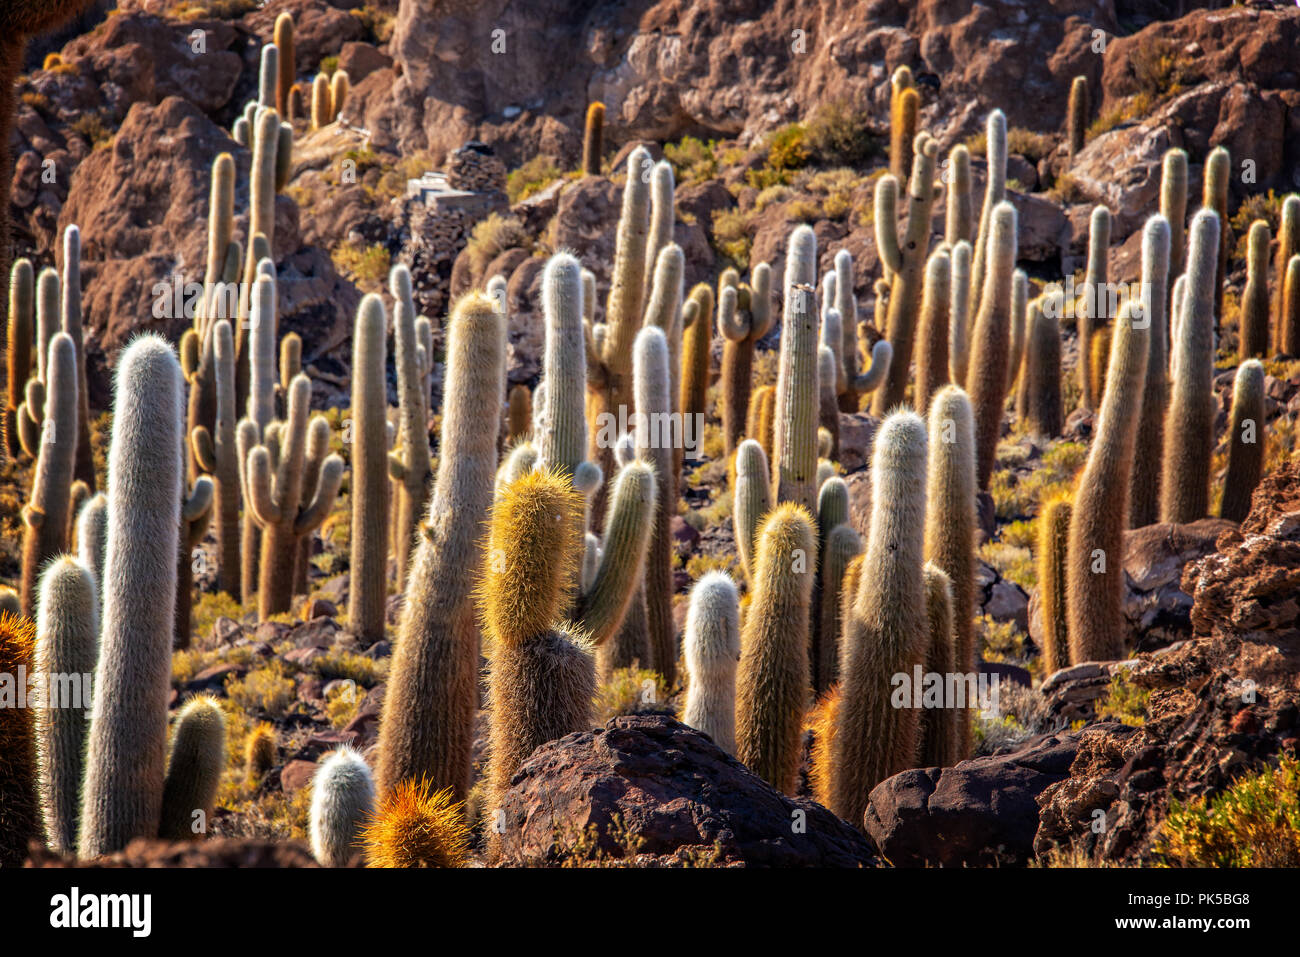 Cactuses in Incahuasi island, Salar de Uyuni salt flat, Potosi, Bolivia Stock Photo